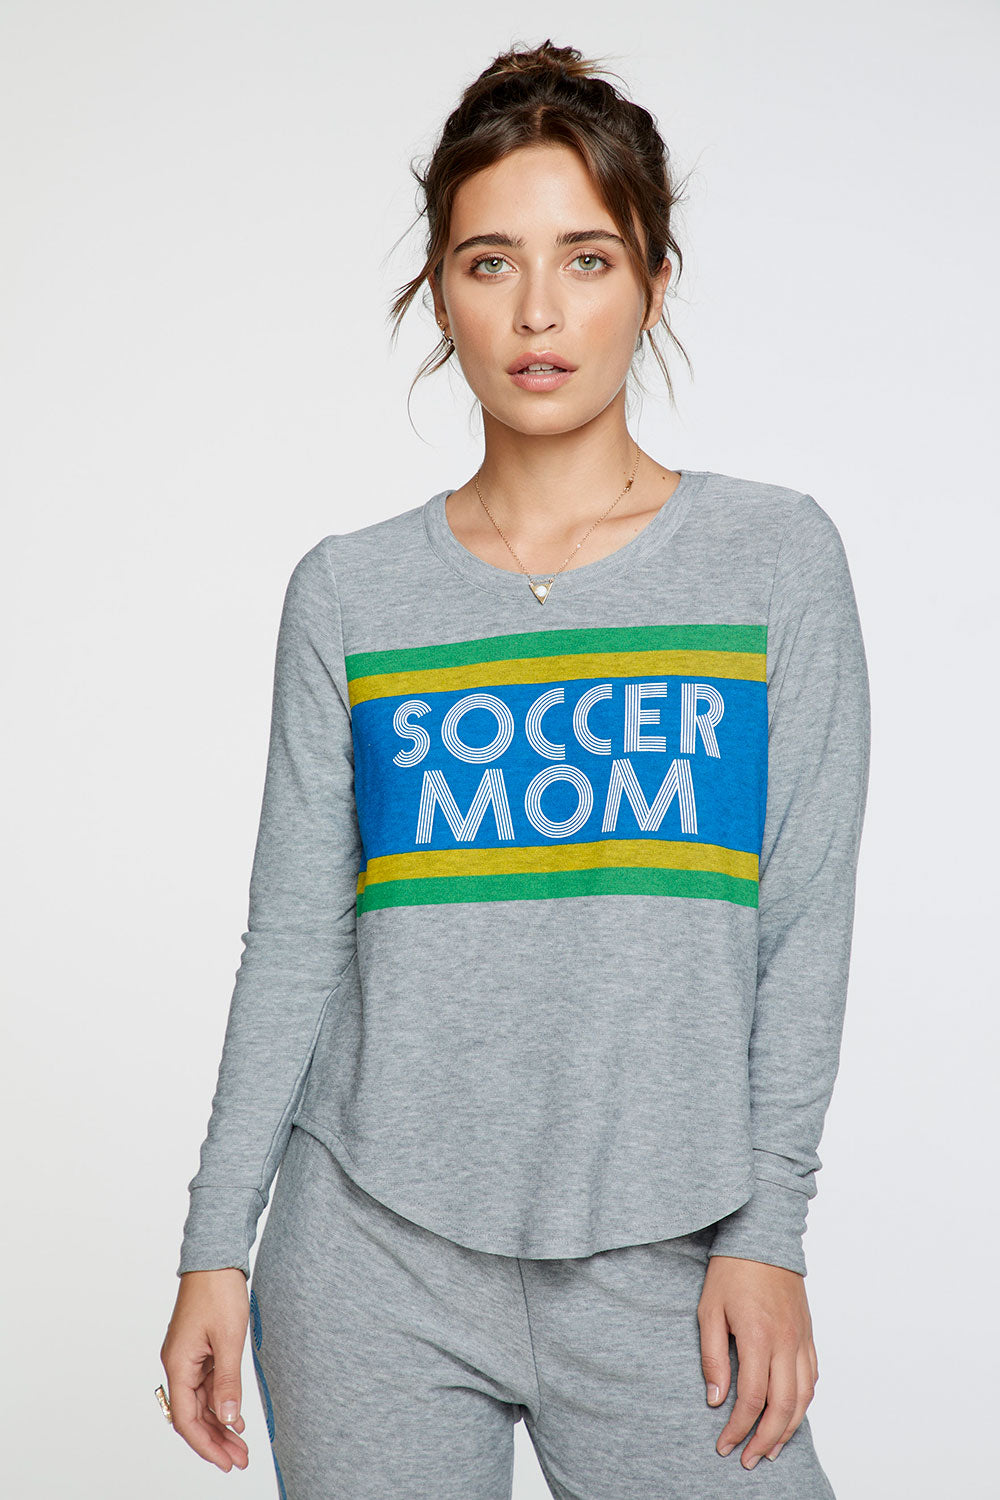 soccer mom sweatshirt